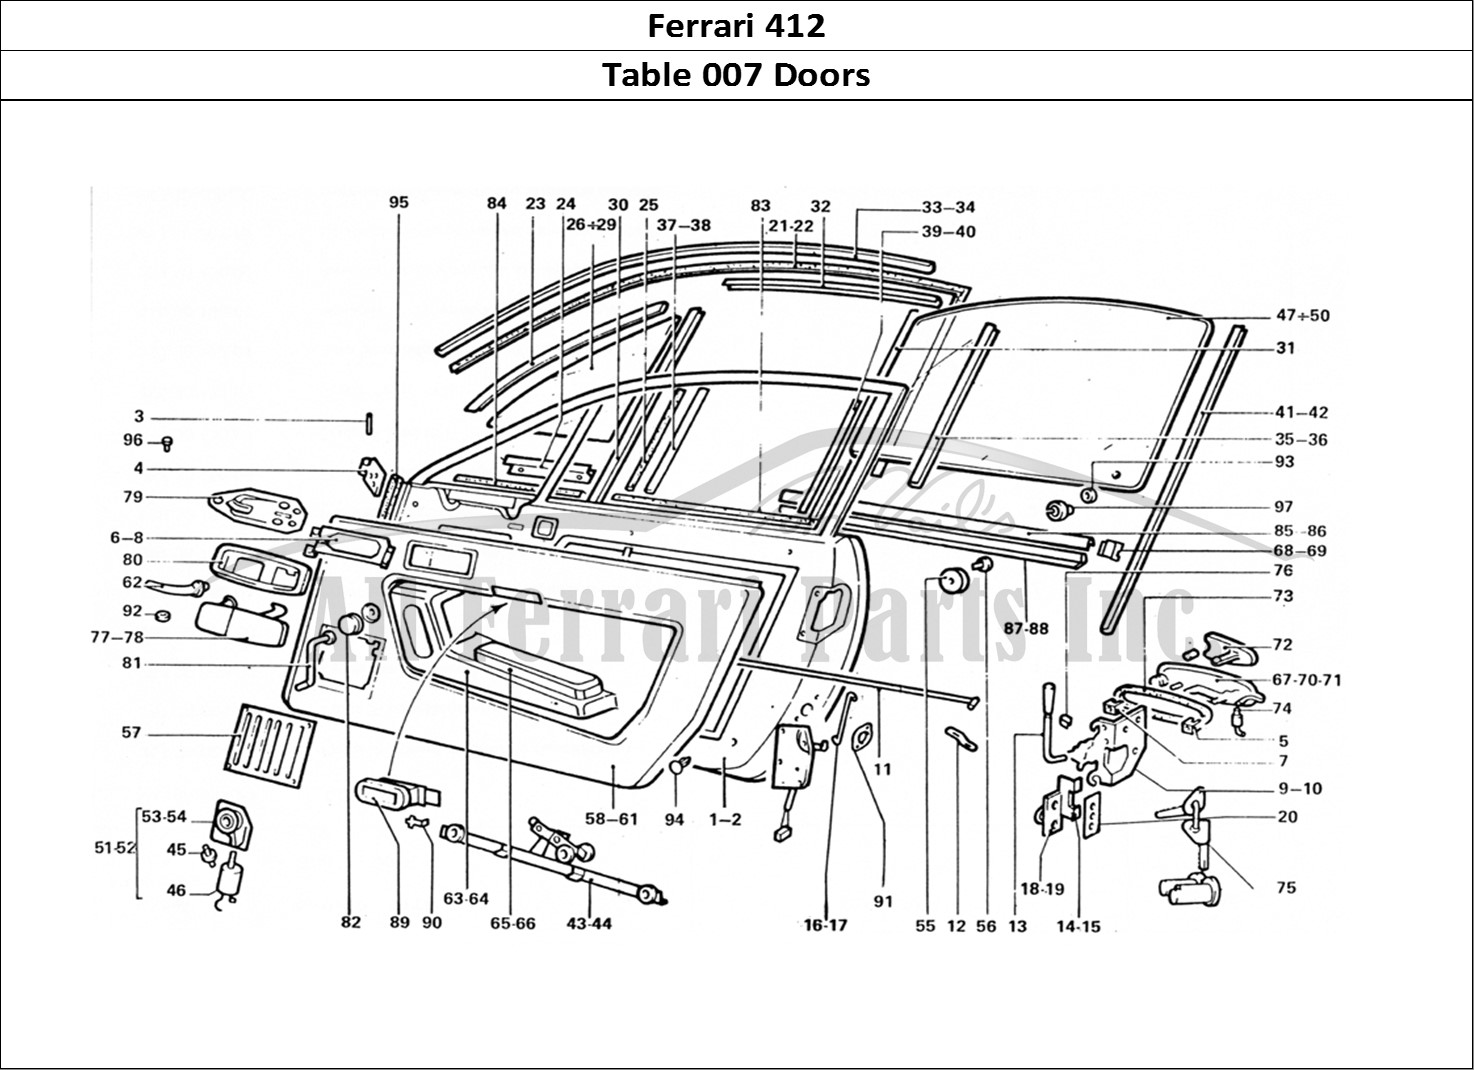 Ferrari Parts Ferrari 412 (Coachwork) Page 007 Doors & Fixings